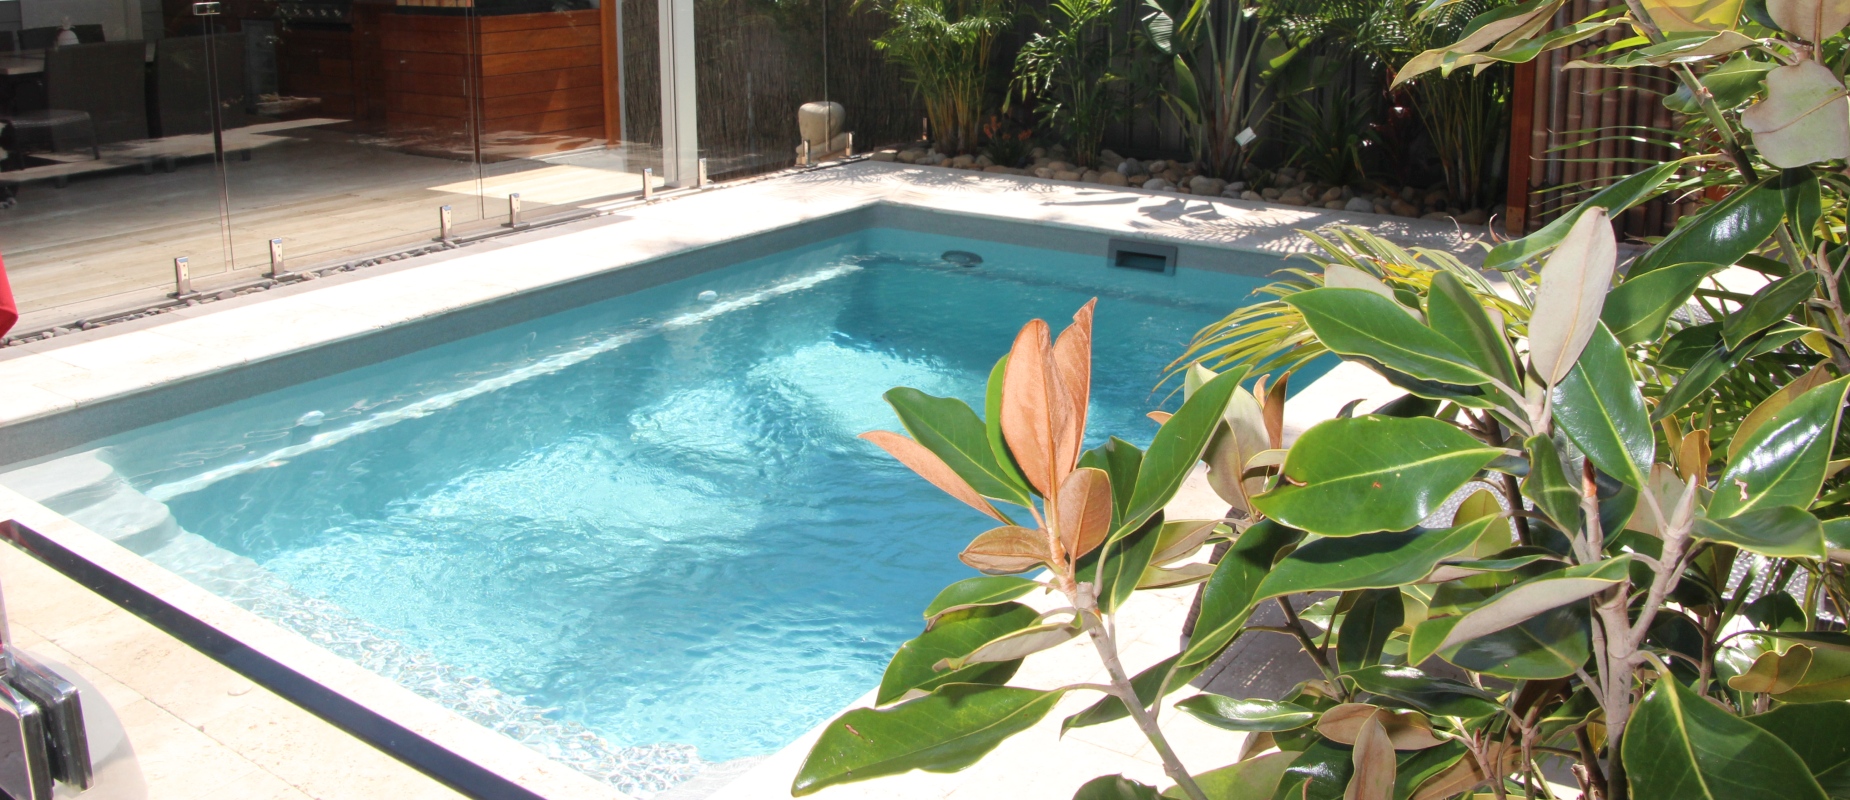 Compass-Pools-Australia_Plunge-Courtyard_Tropical-pool-design-idea